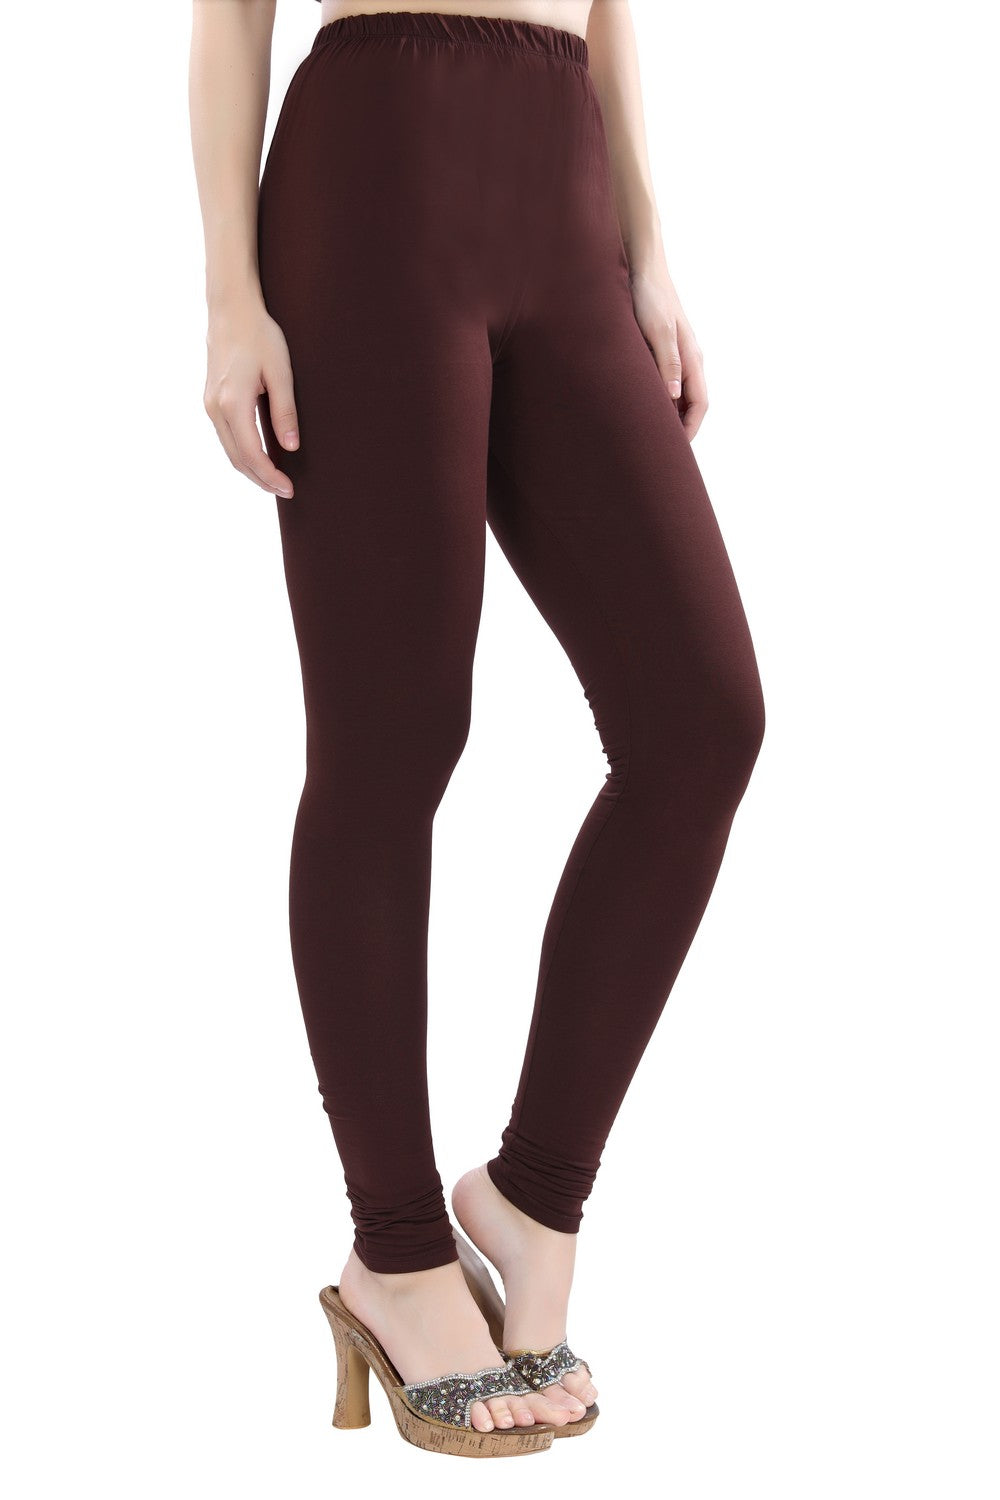 Plain Colours 4-Way Stretch Cotton Lycra Leggings Soft Yoga Pants Tights  Churidar